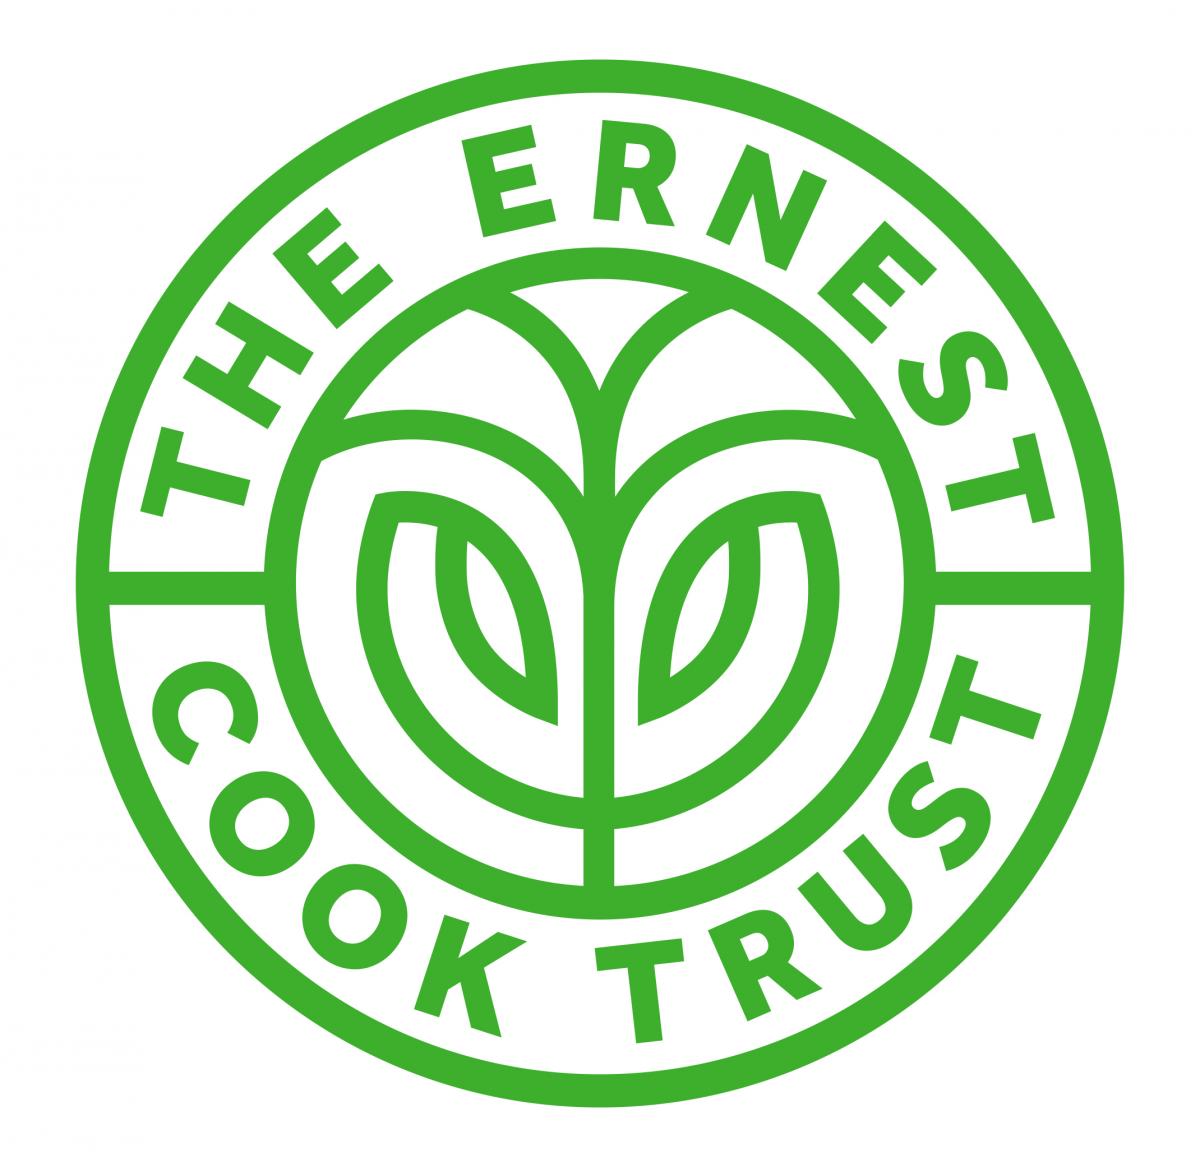 The Ernest Cook Trust logo